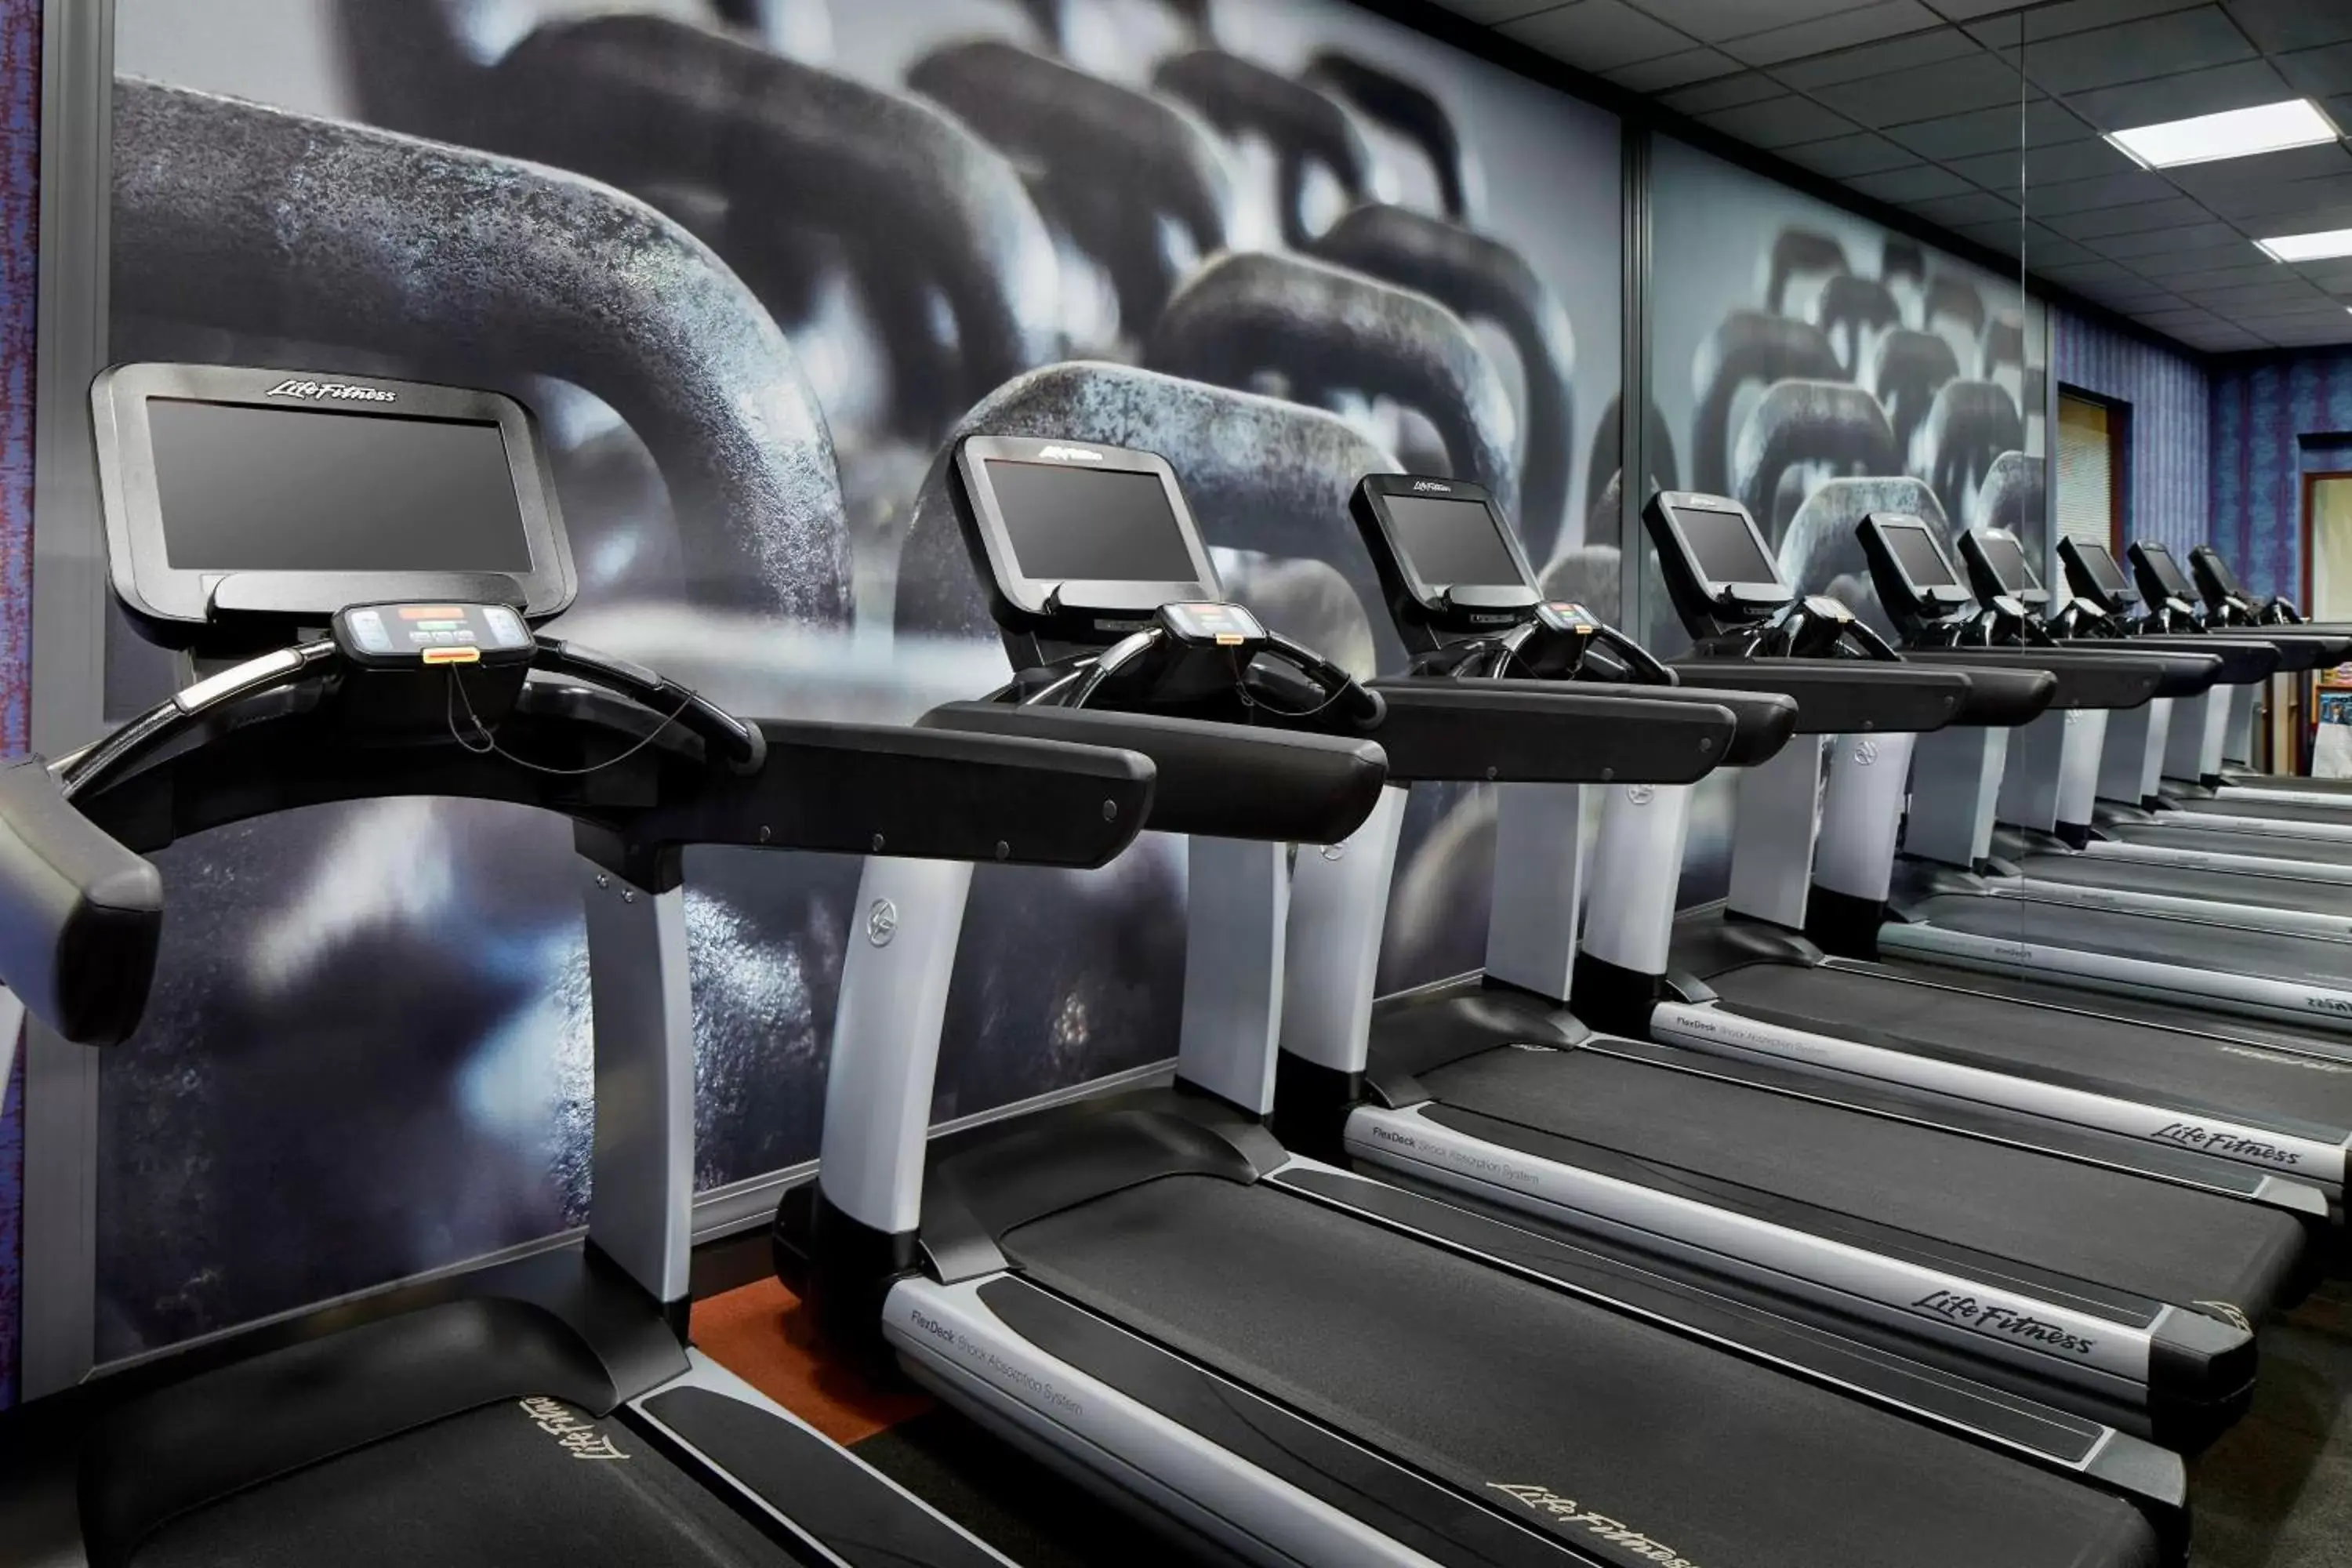 Fitness centre/facilities, Fitness Center/Facilities in Marriott Columbus Northwest